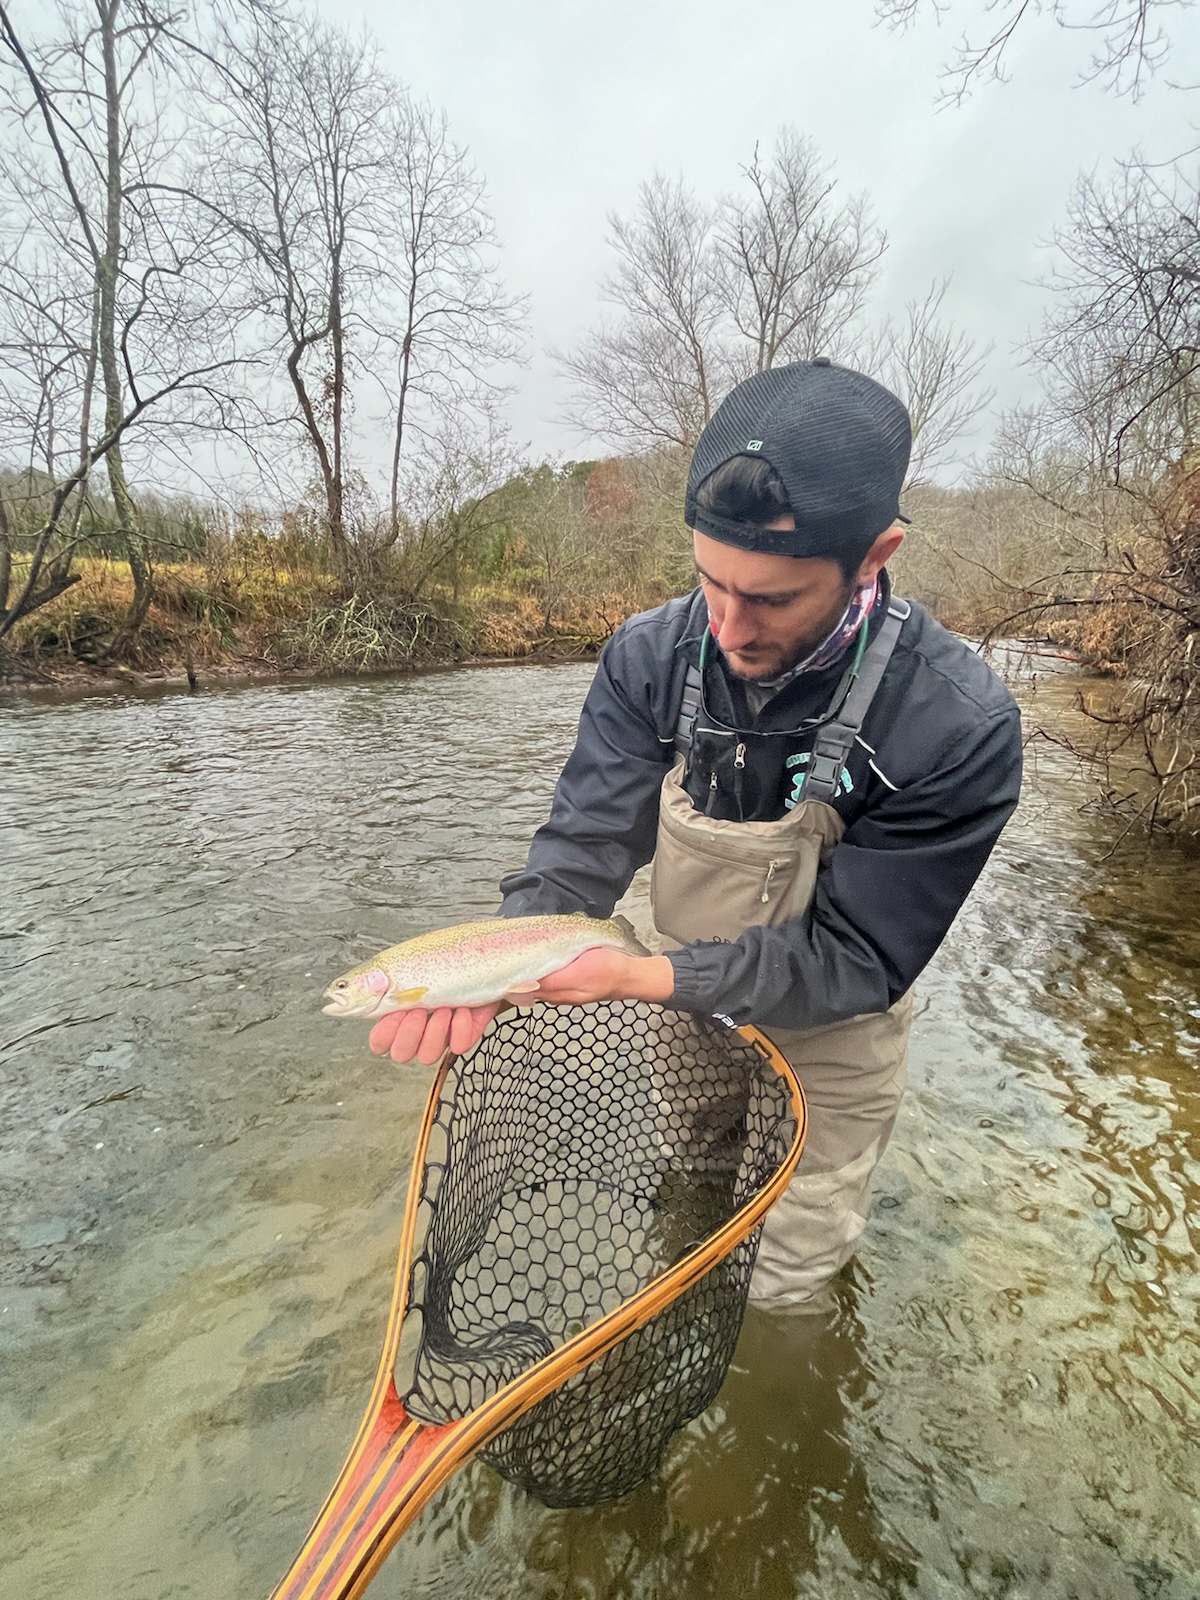 Proper fish handling of a North Georgia rainbow trout